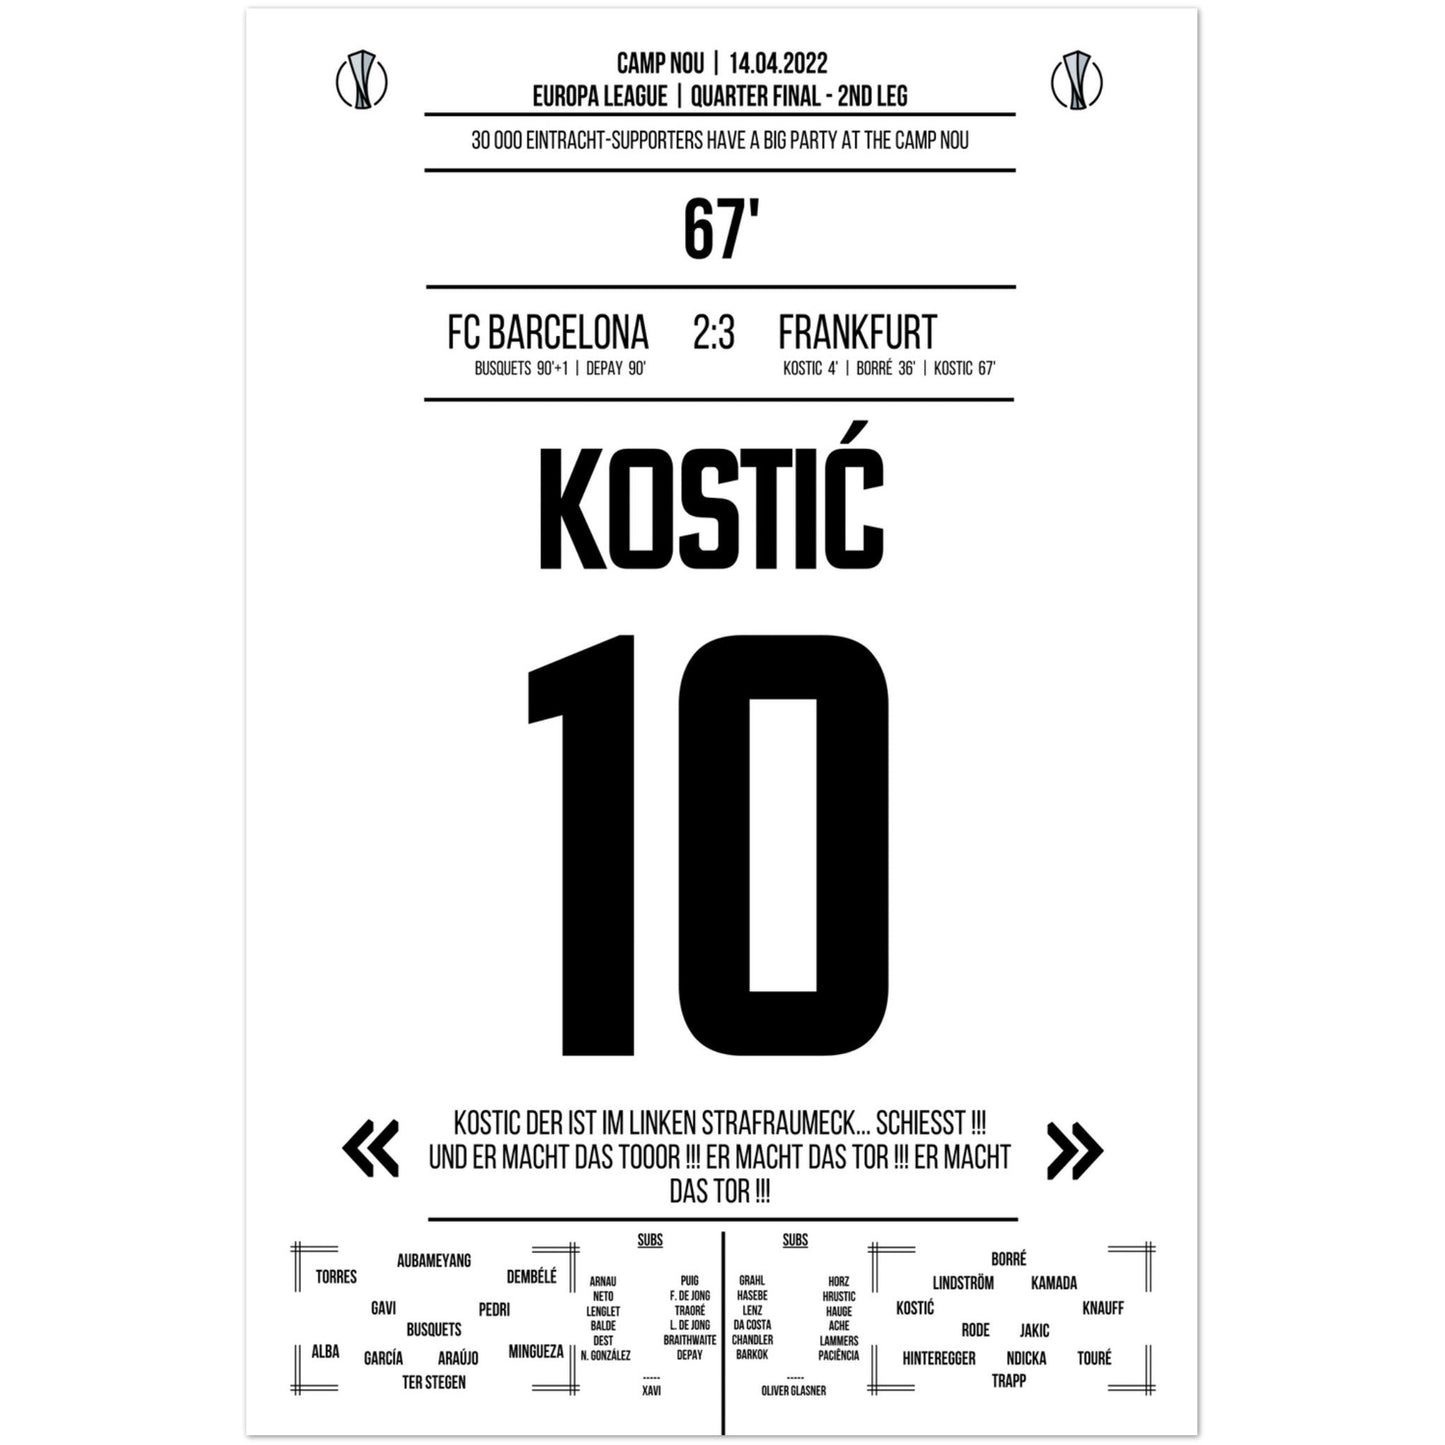 Kostic's gala performance at Frankfurt's big party at the Camp Nou